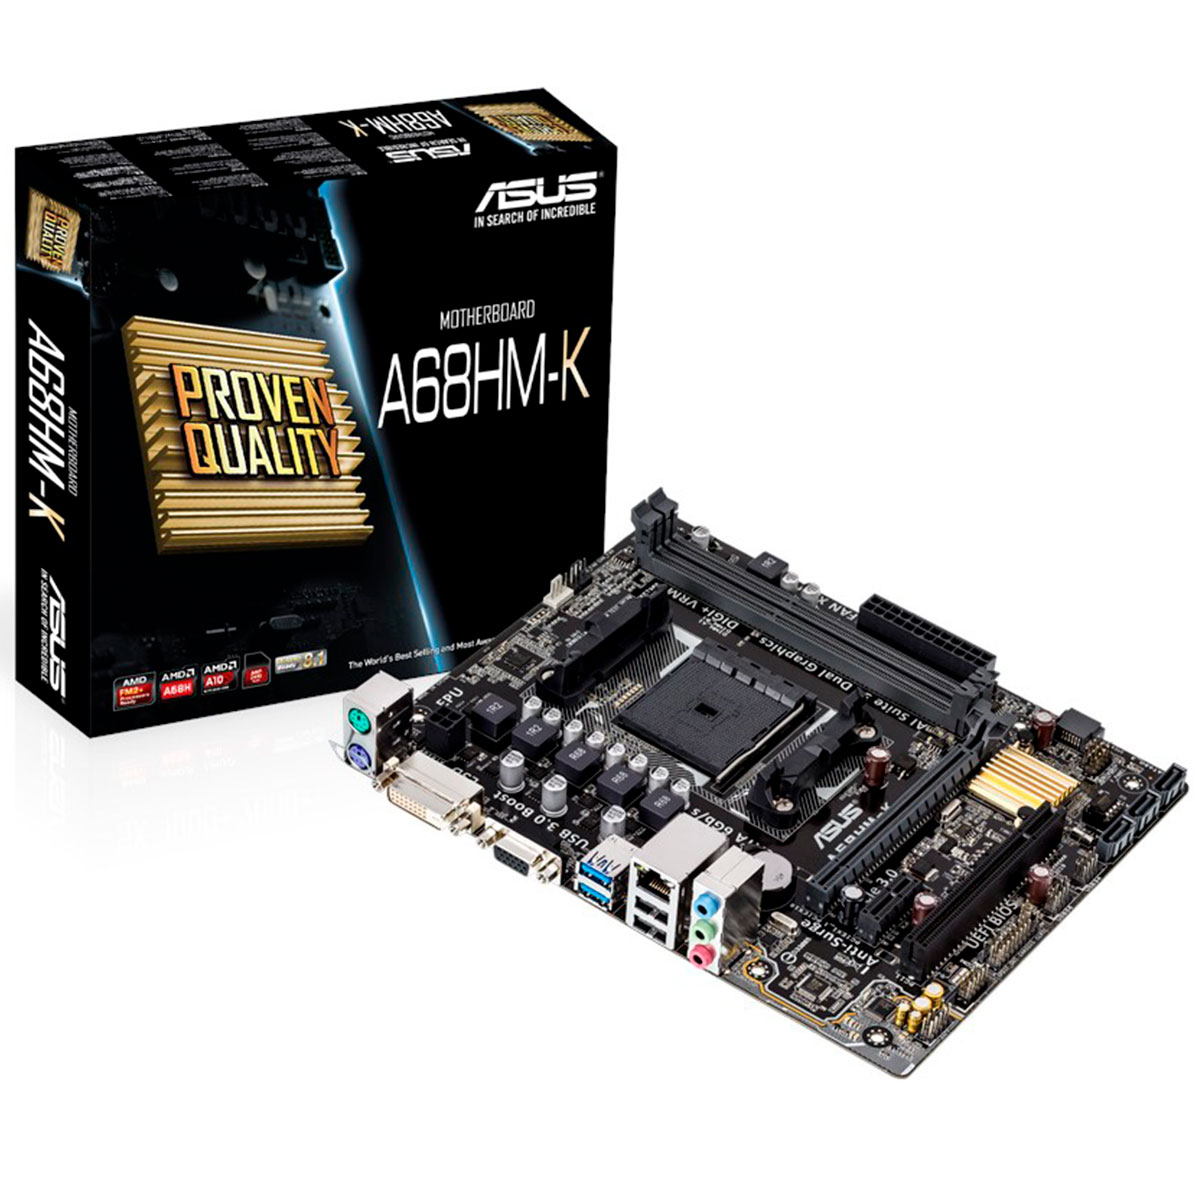 Asus A68HM-K (FM2+ - DDR3) - Chipset AMD A68H - USB 3.0 - Micro ATX